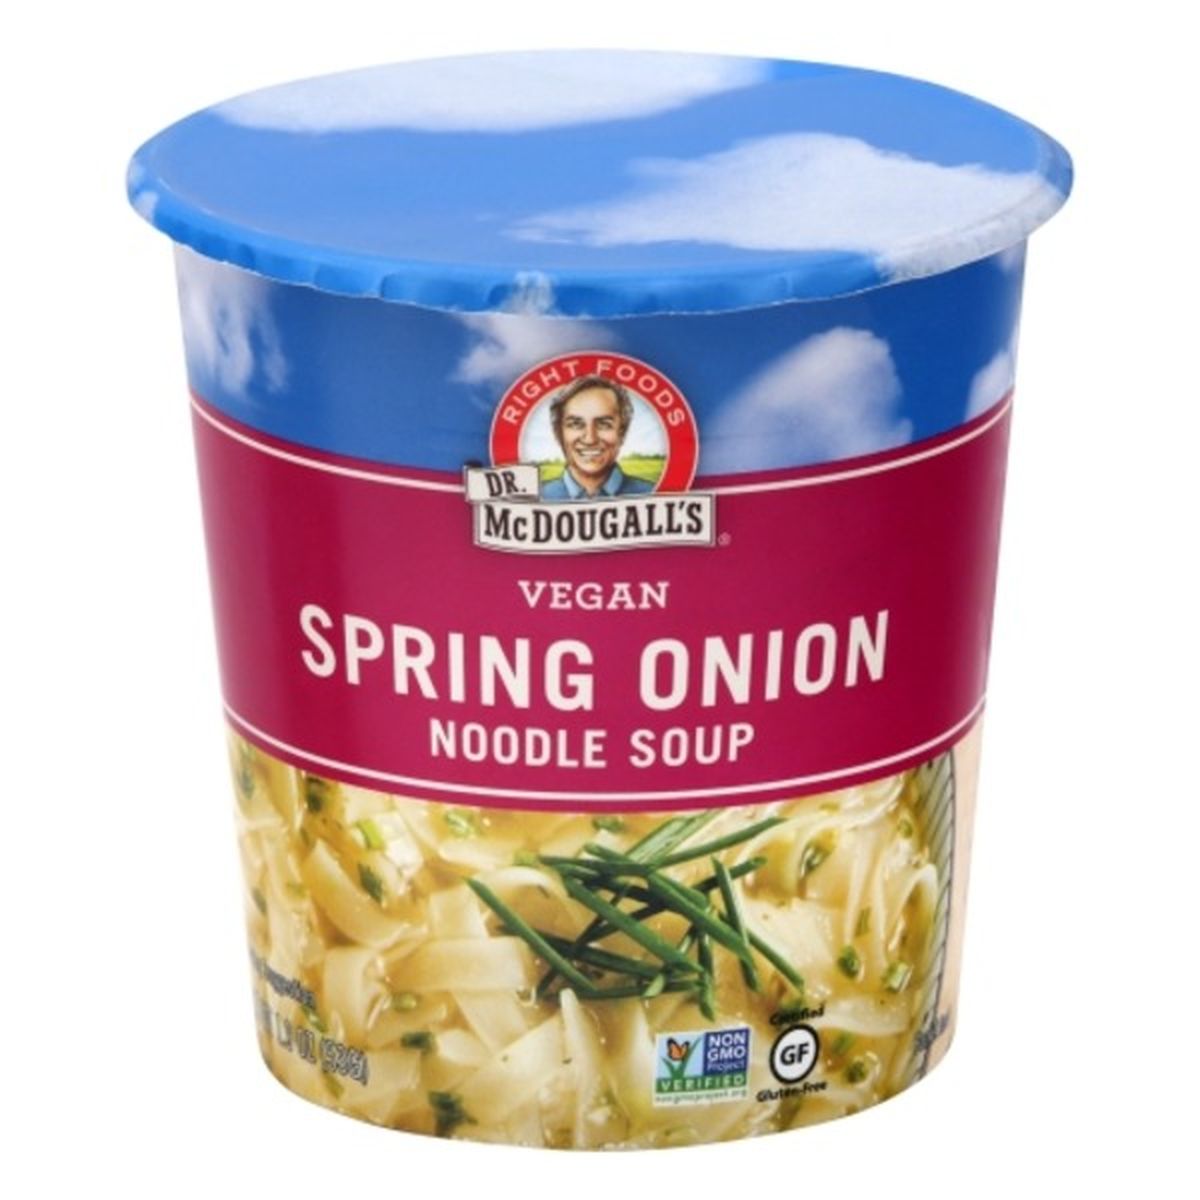 Calories in Dr. McDougall's Noodle Soup, Vegan, Spring Onion